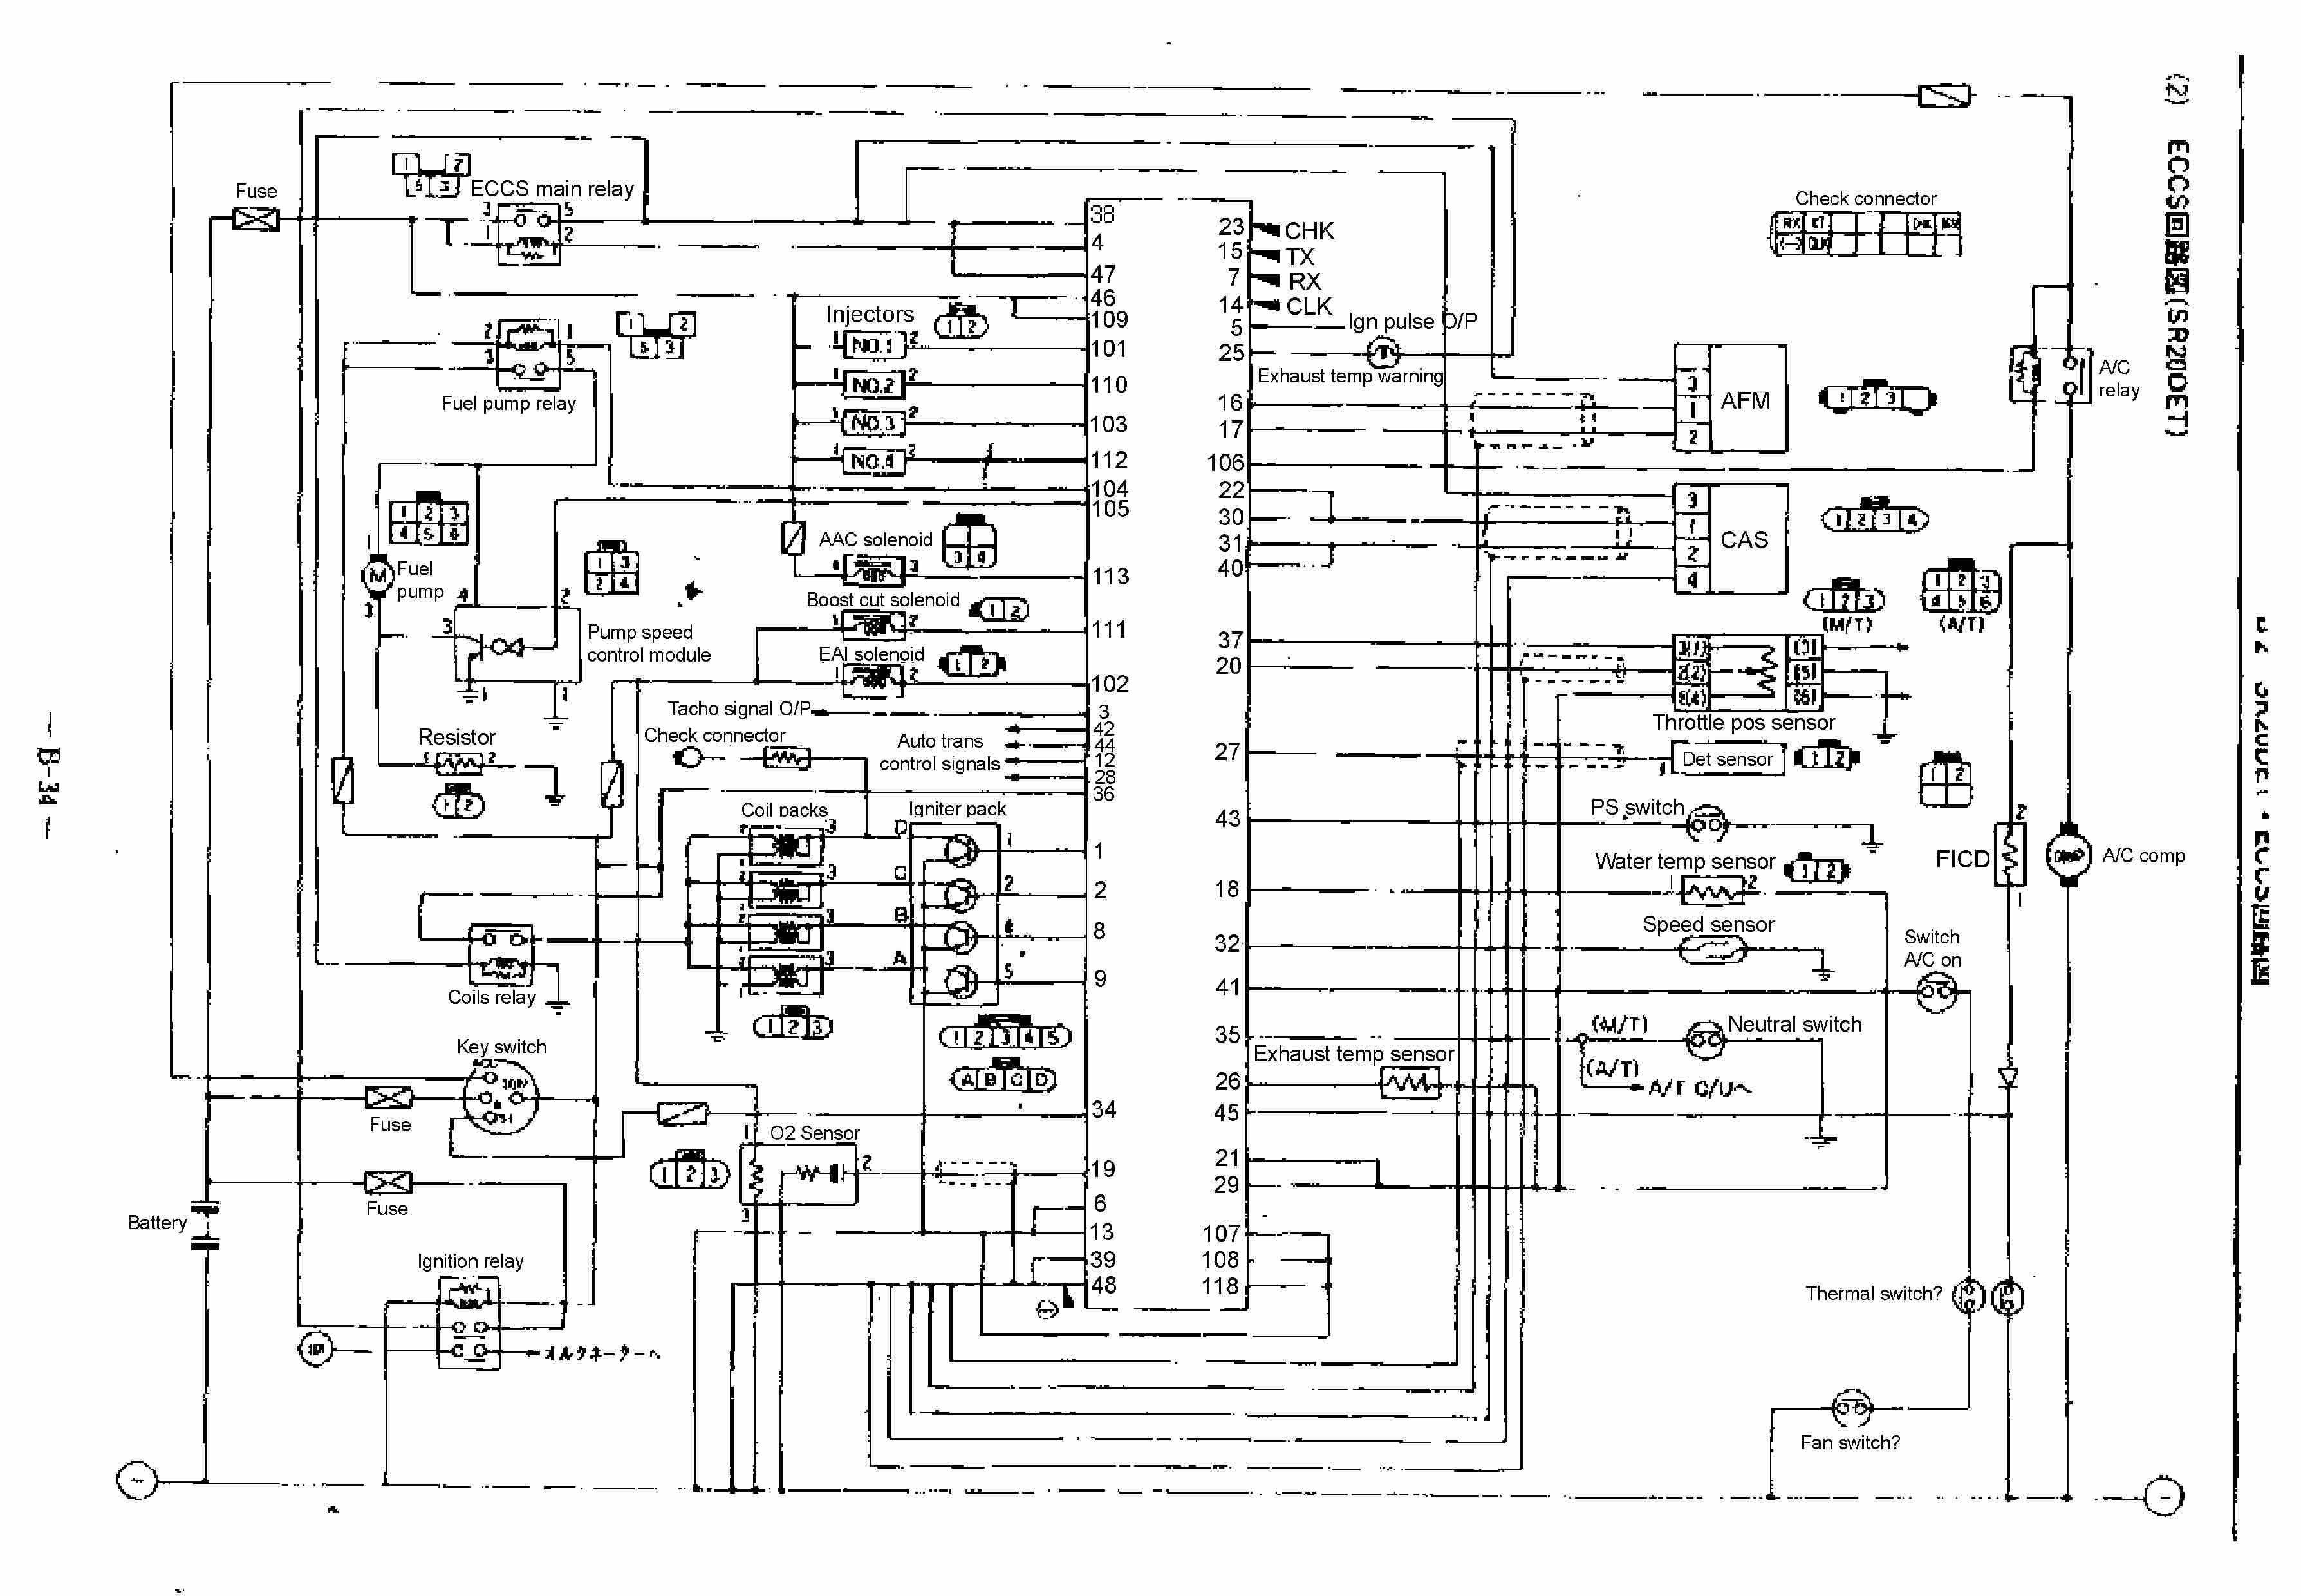 Car Body Part Diagram Electrical Wiring Diagrams Collision Body Repair Manual Nissan Note Of Car Body Part Diagram